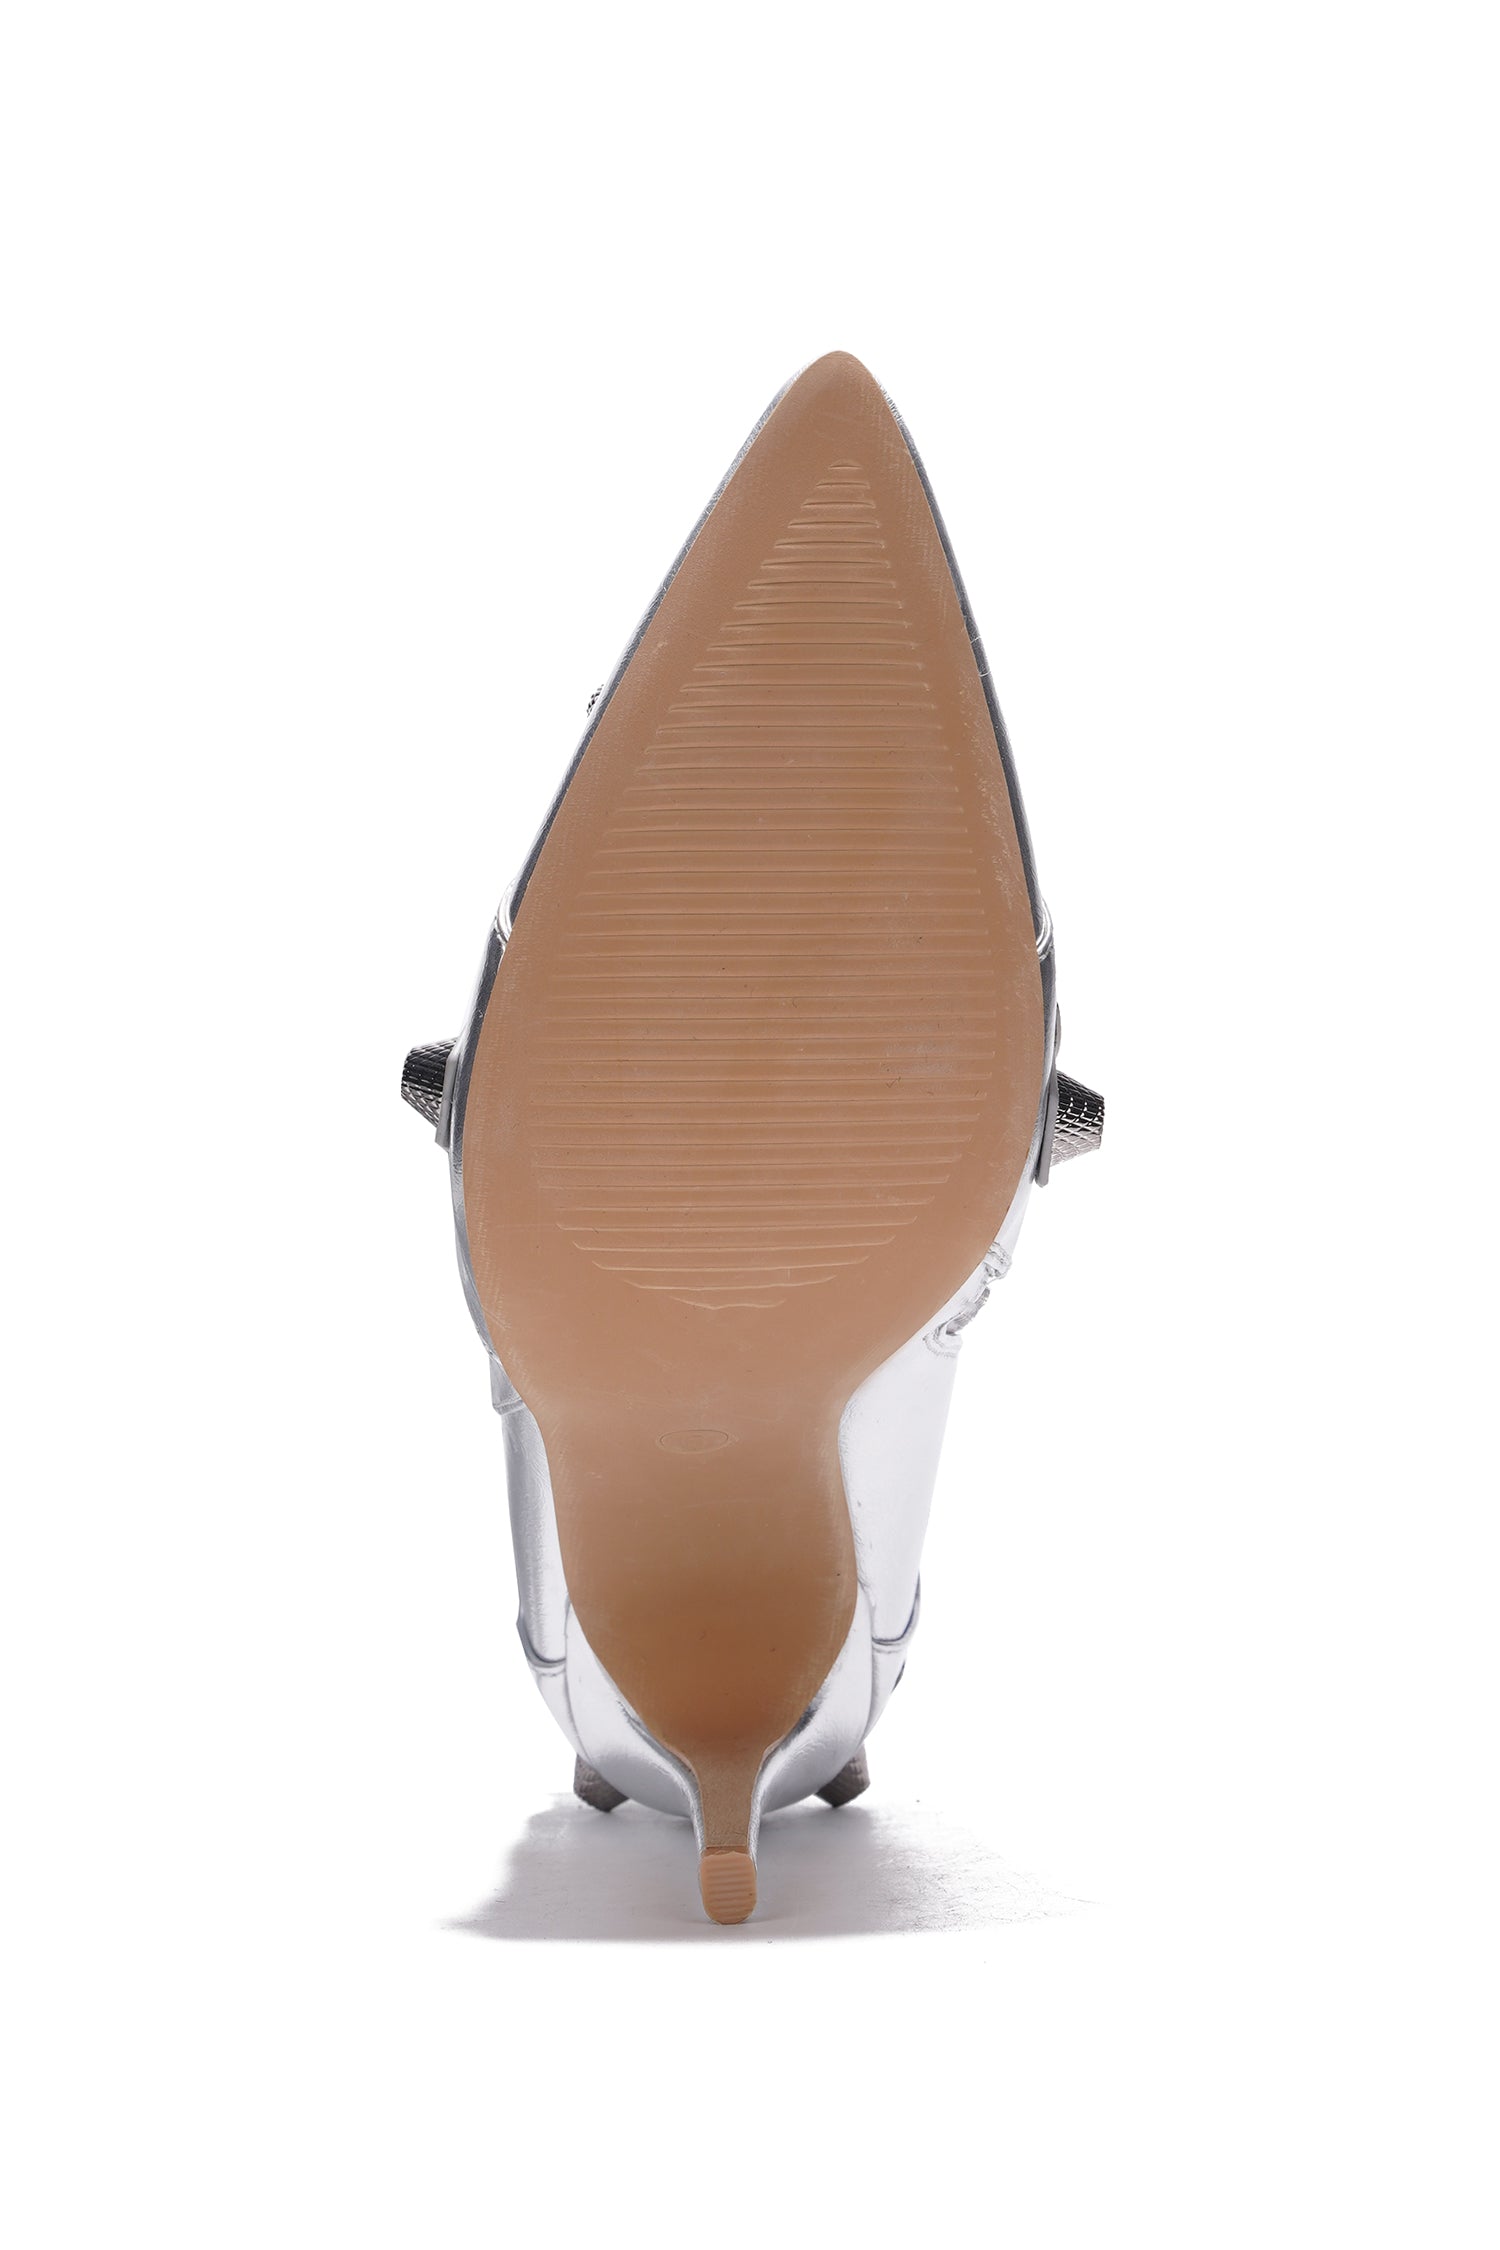 Vega Metallic Pointed Toe Stiletto Over The Knee Boots